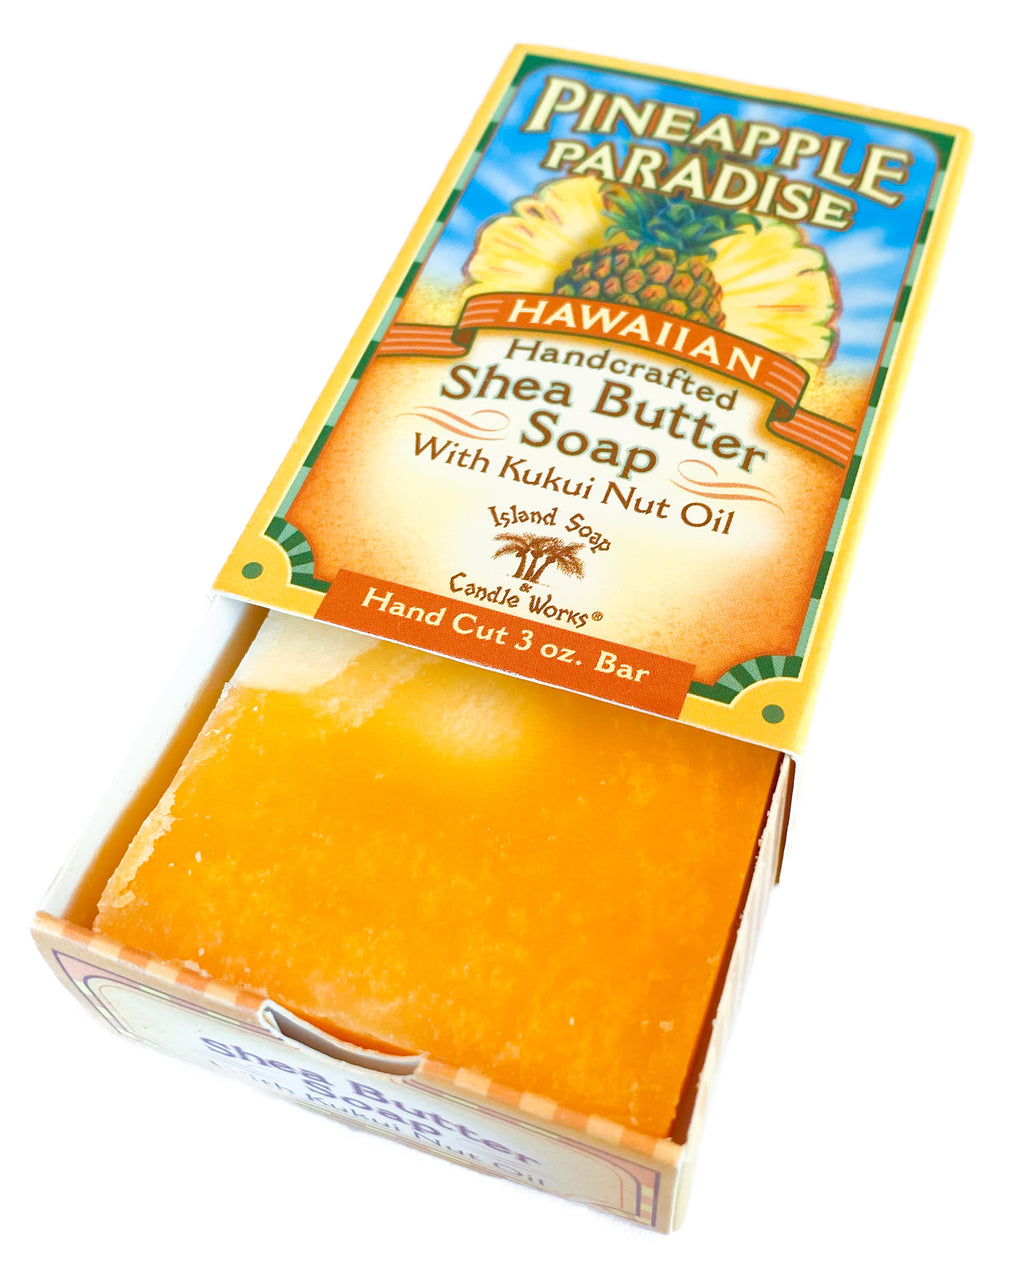 Pineapple Paradise Hydrating 3 oz. Shea Butter Soap